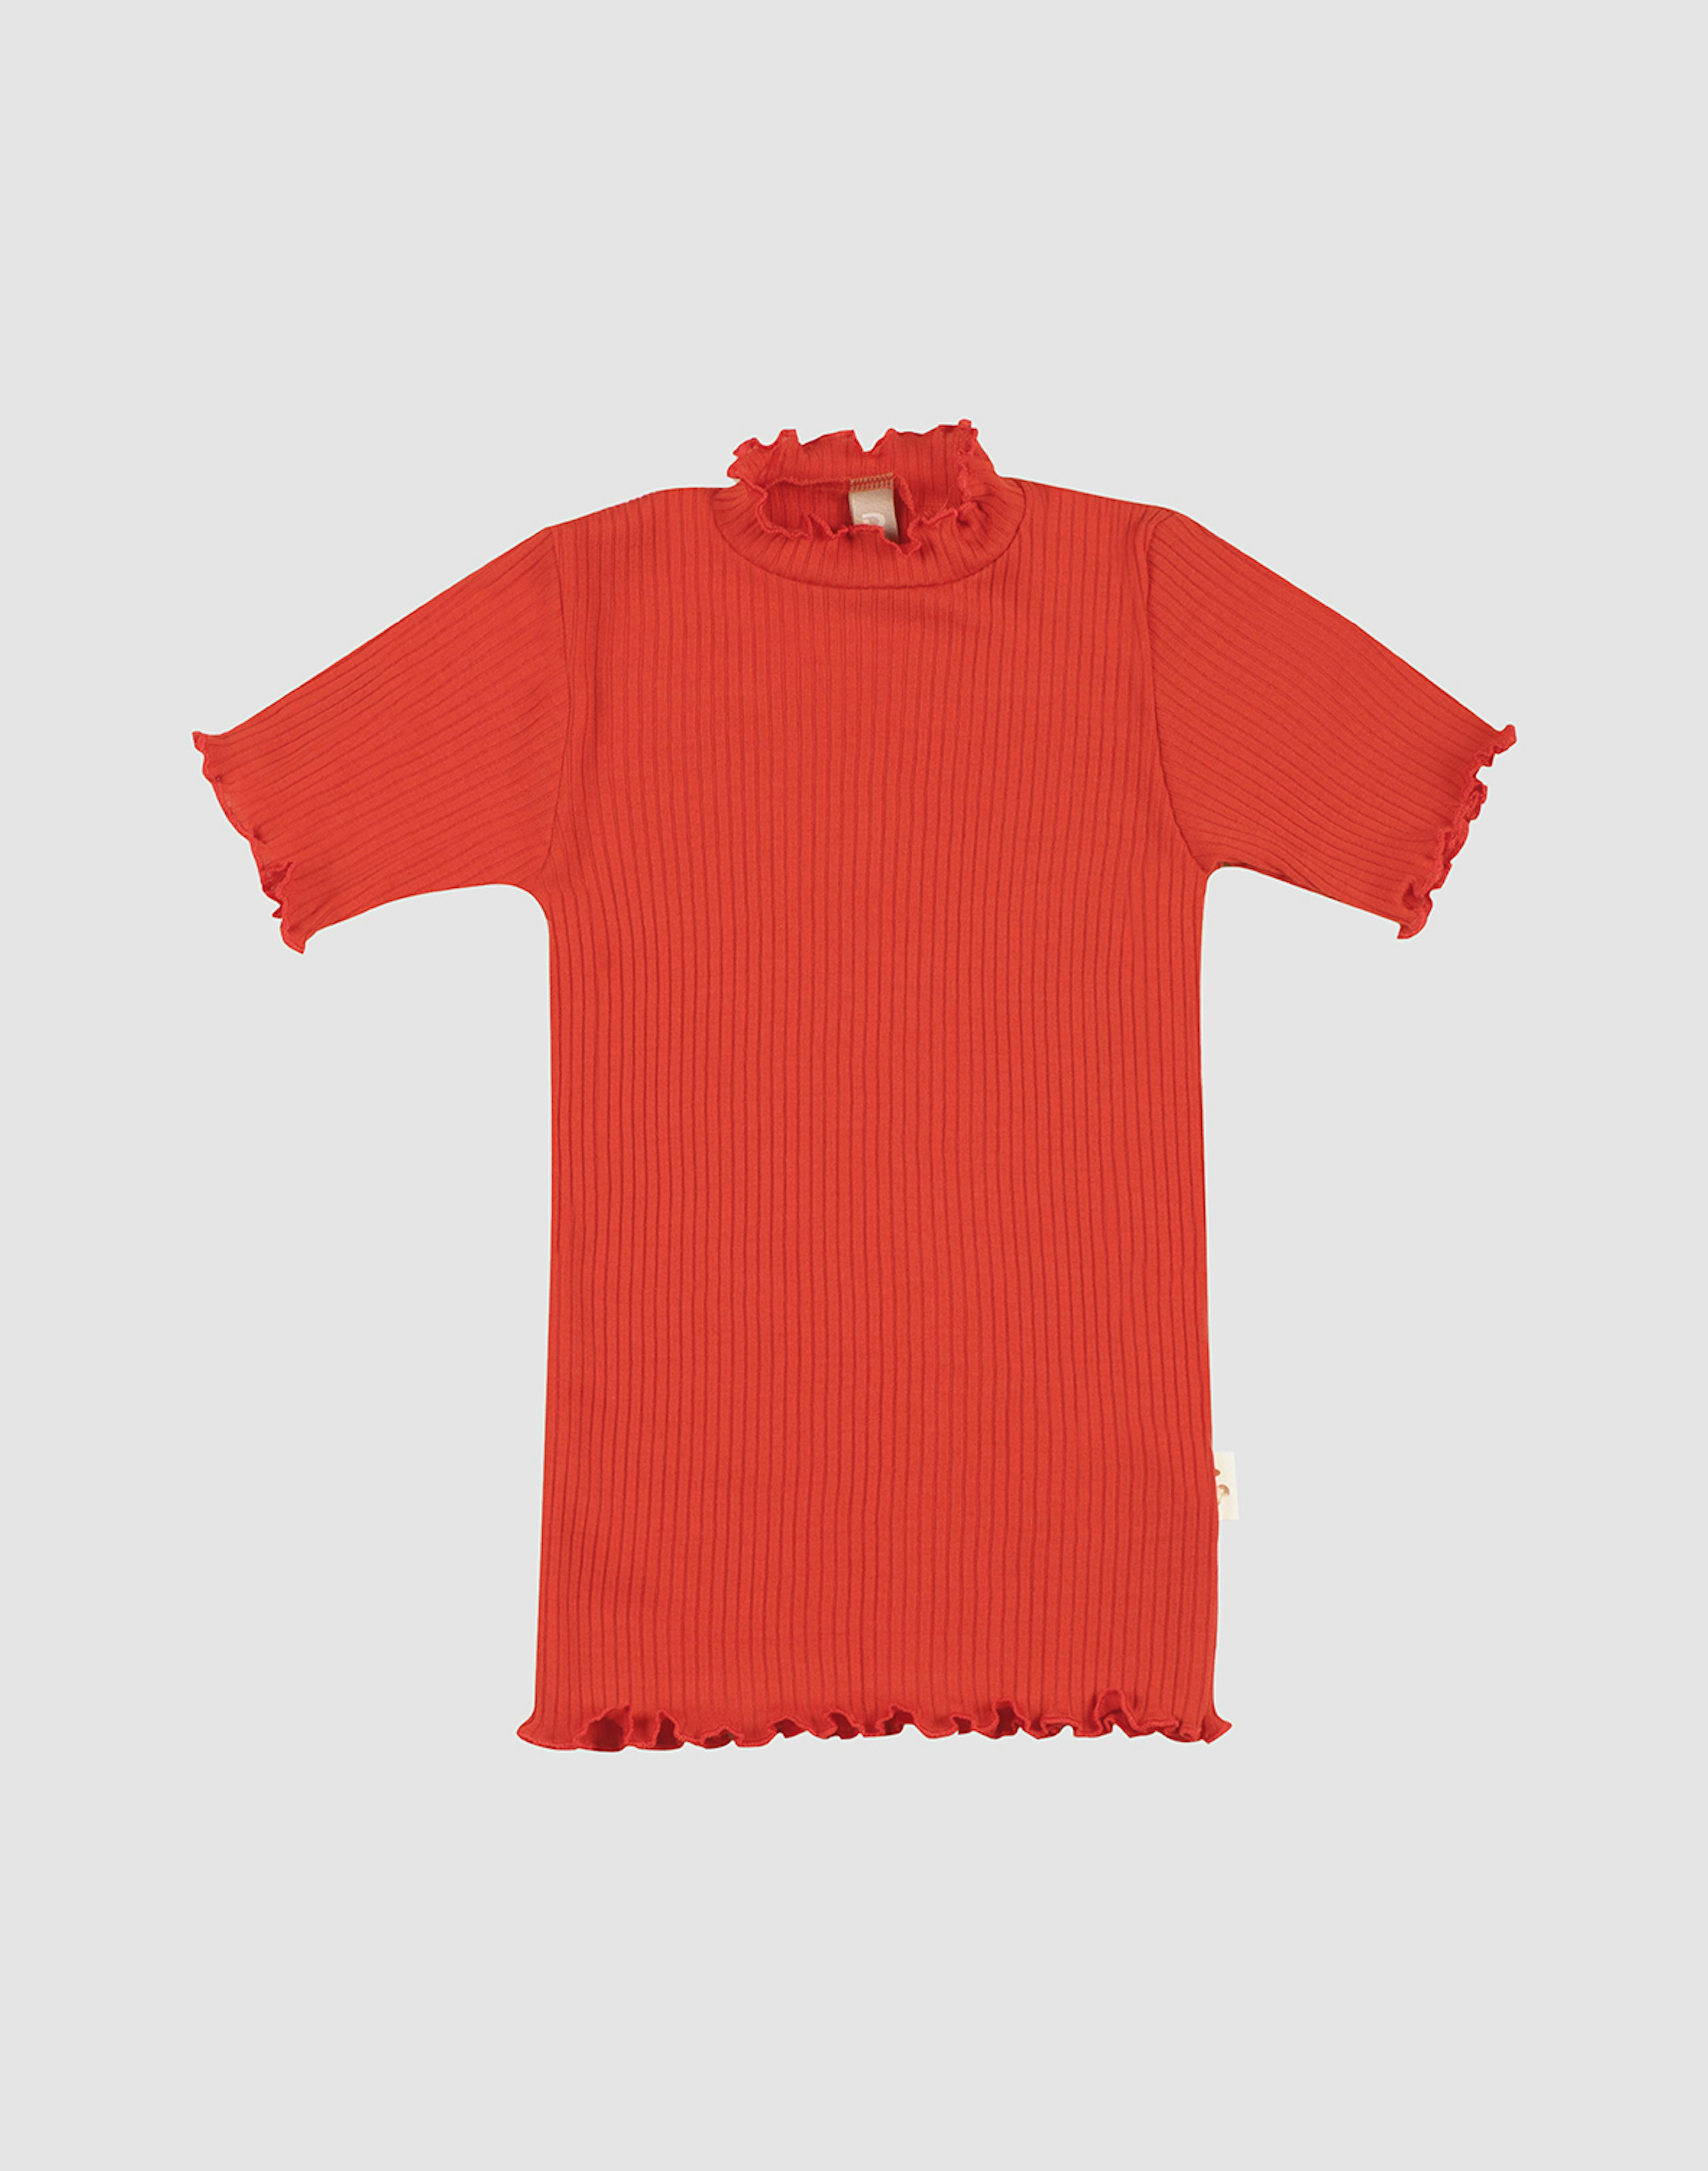 Kinder T-Shirt Rot gekräuseltem - Rand Merinowolle Dilling aus - mit